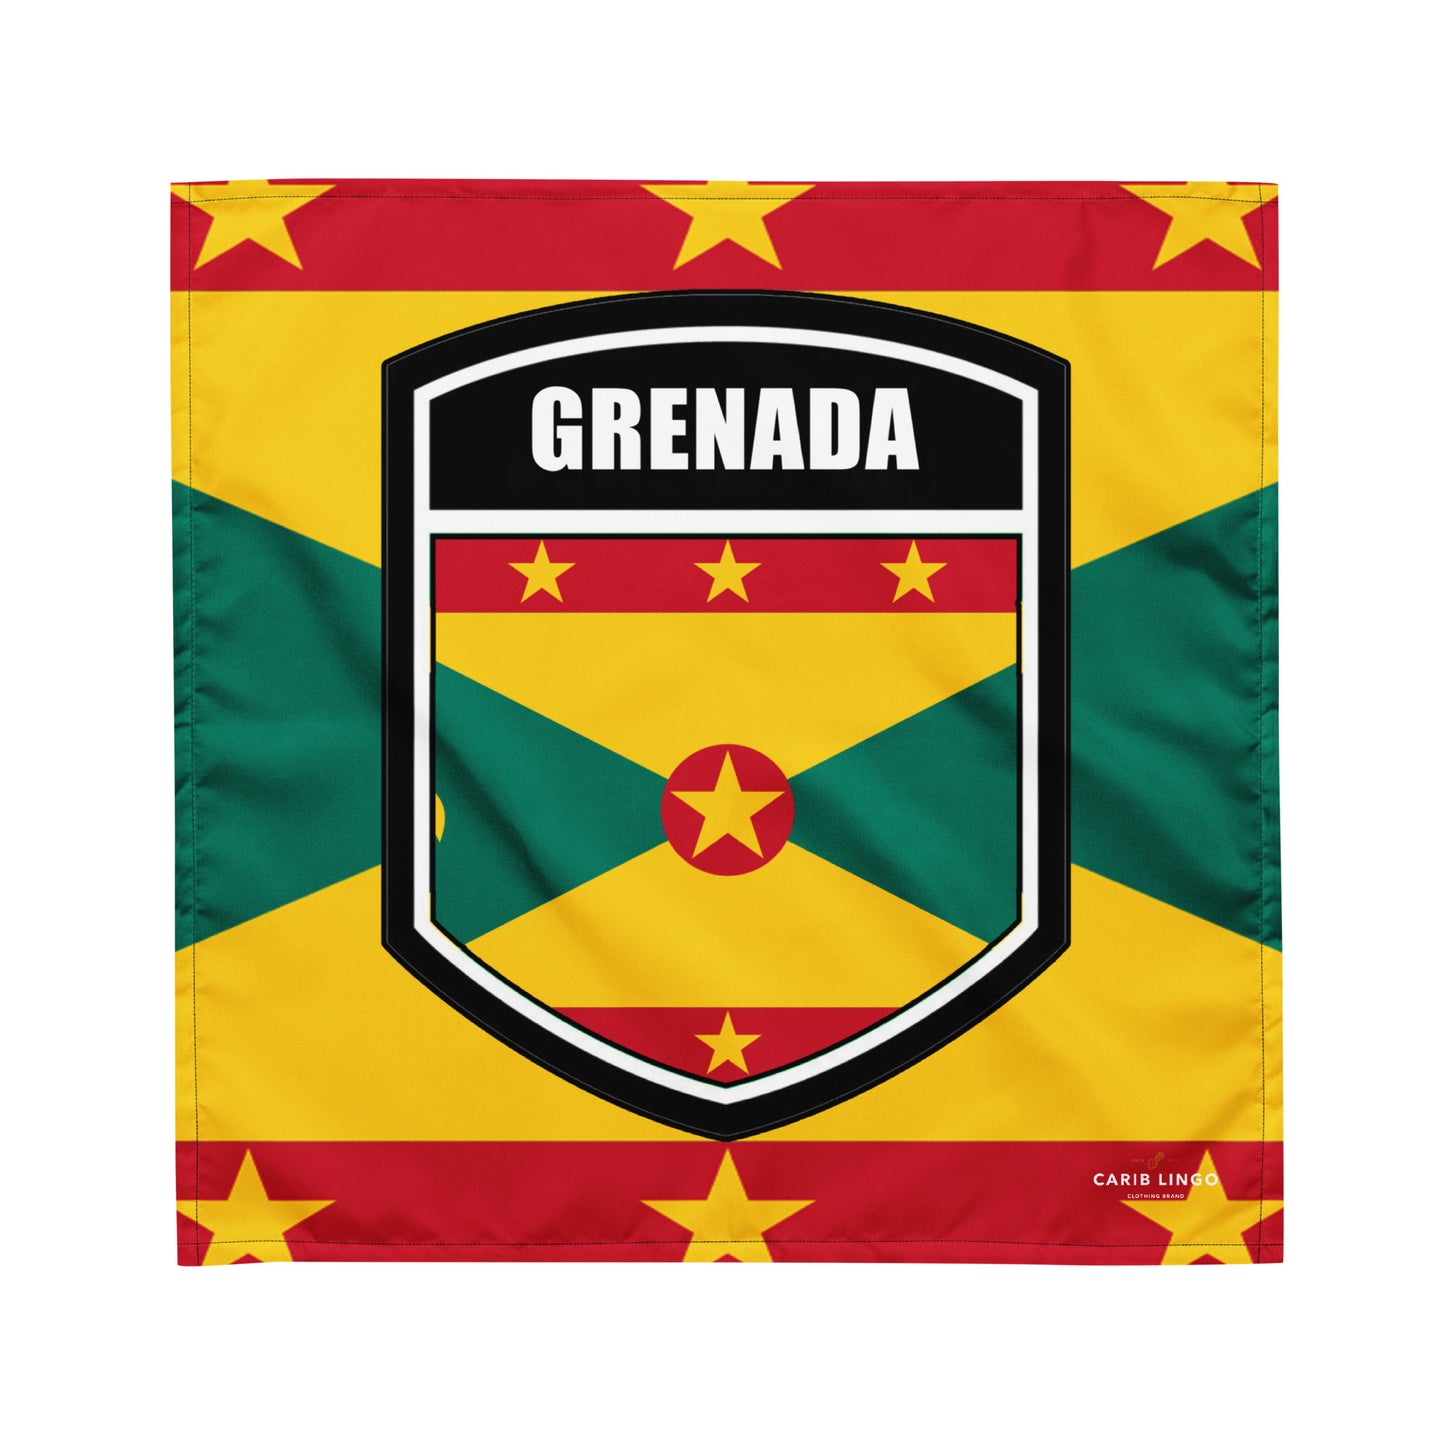 Grenada bandana